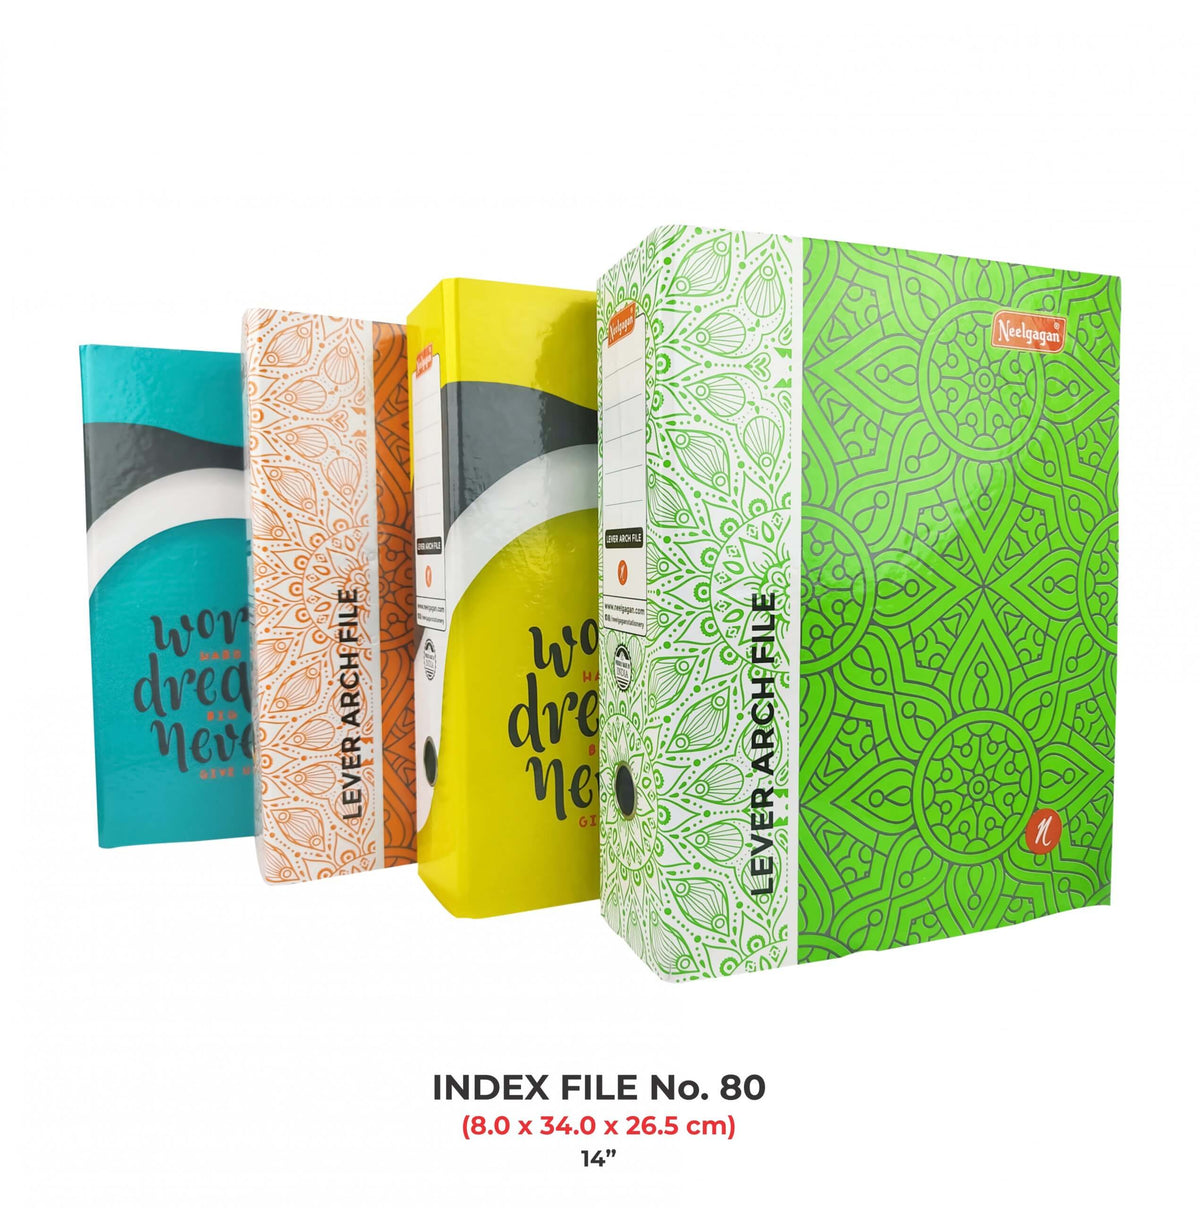 Index File (Printed) (Lever Arch - Box File) No.80 (14 inch)